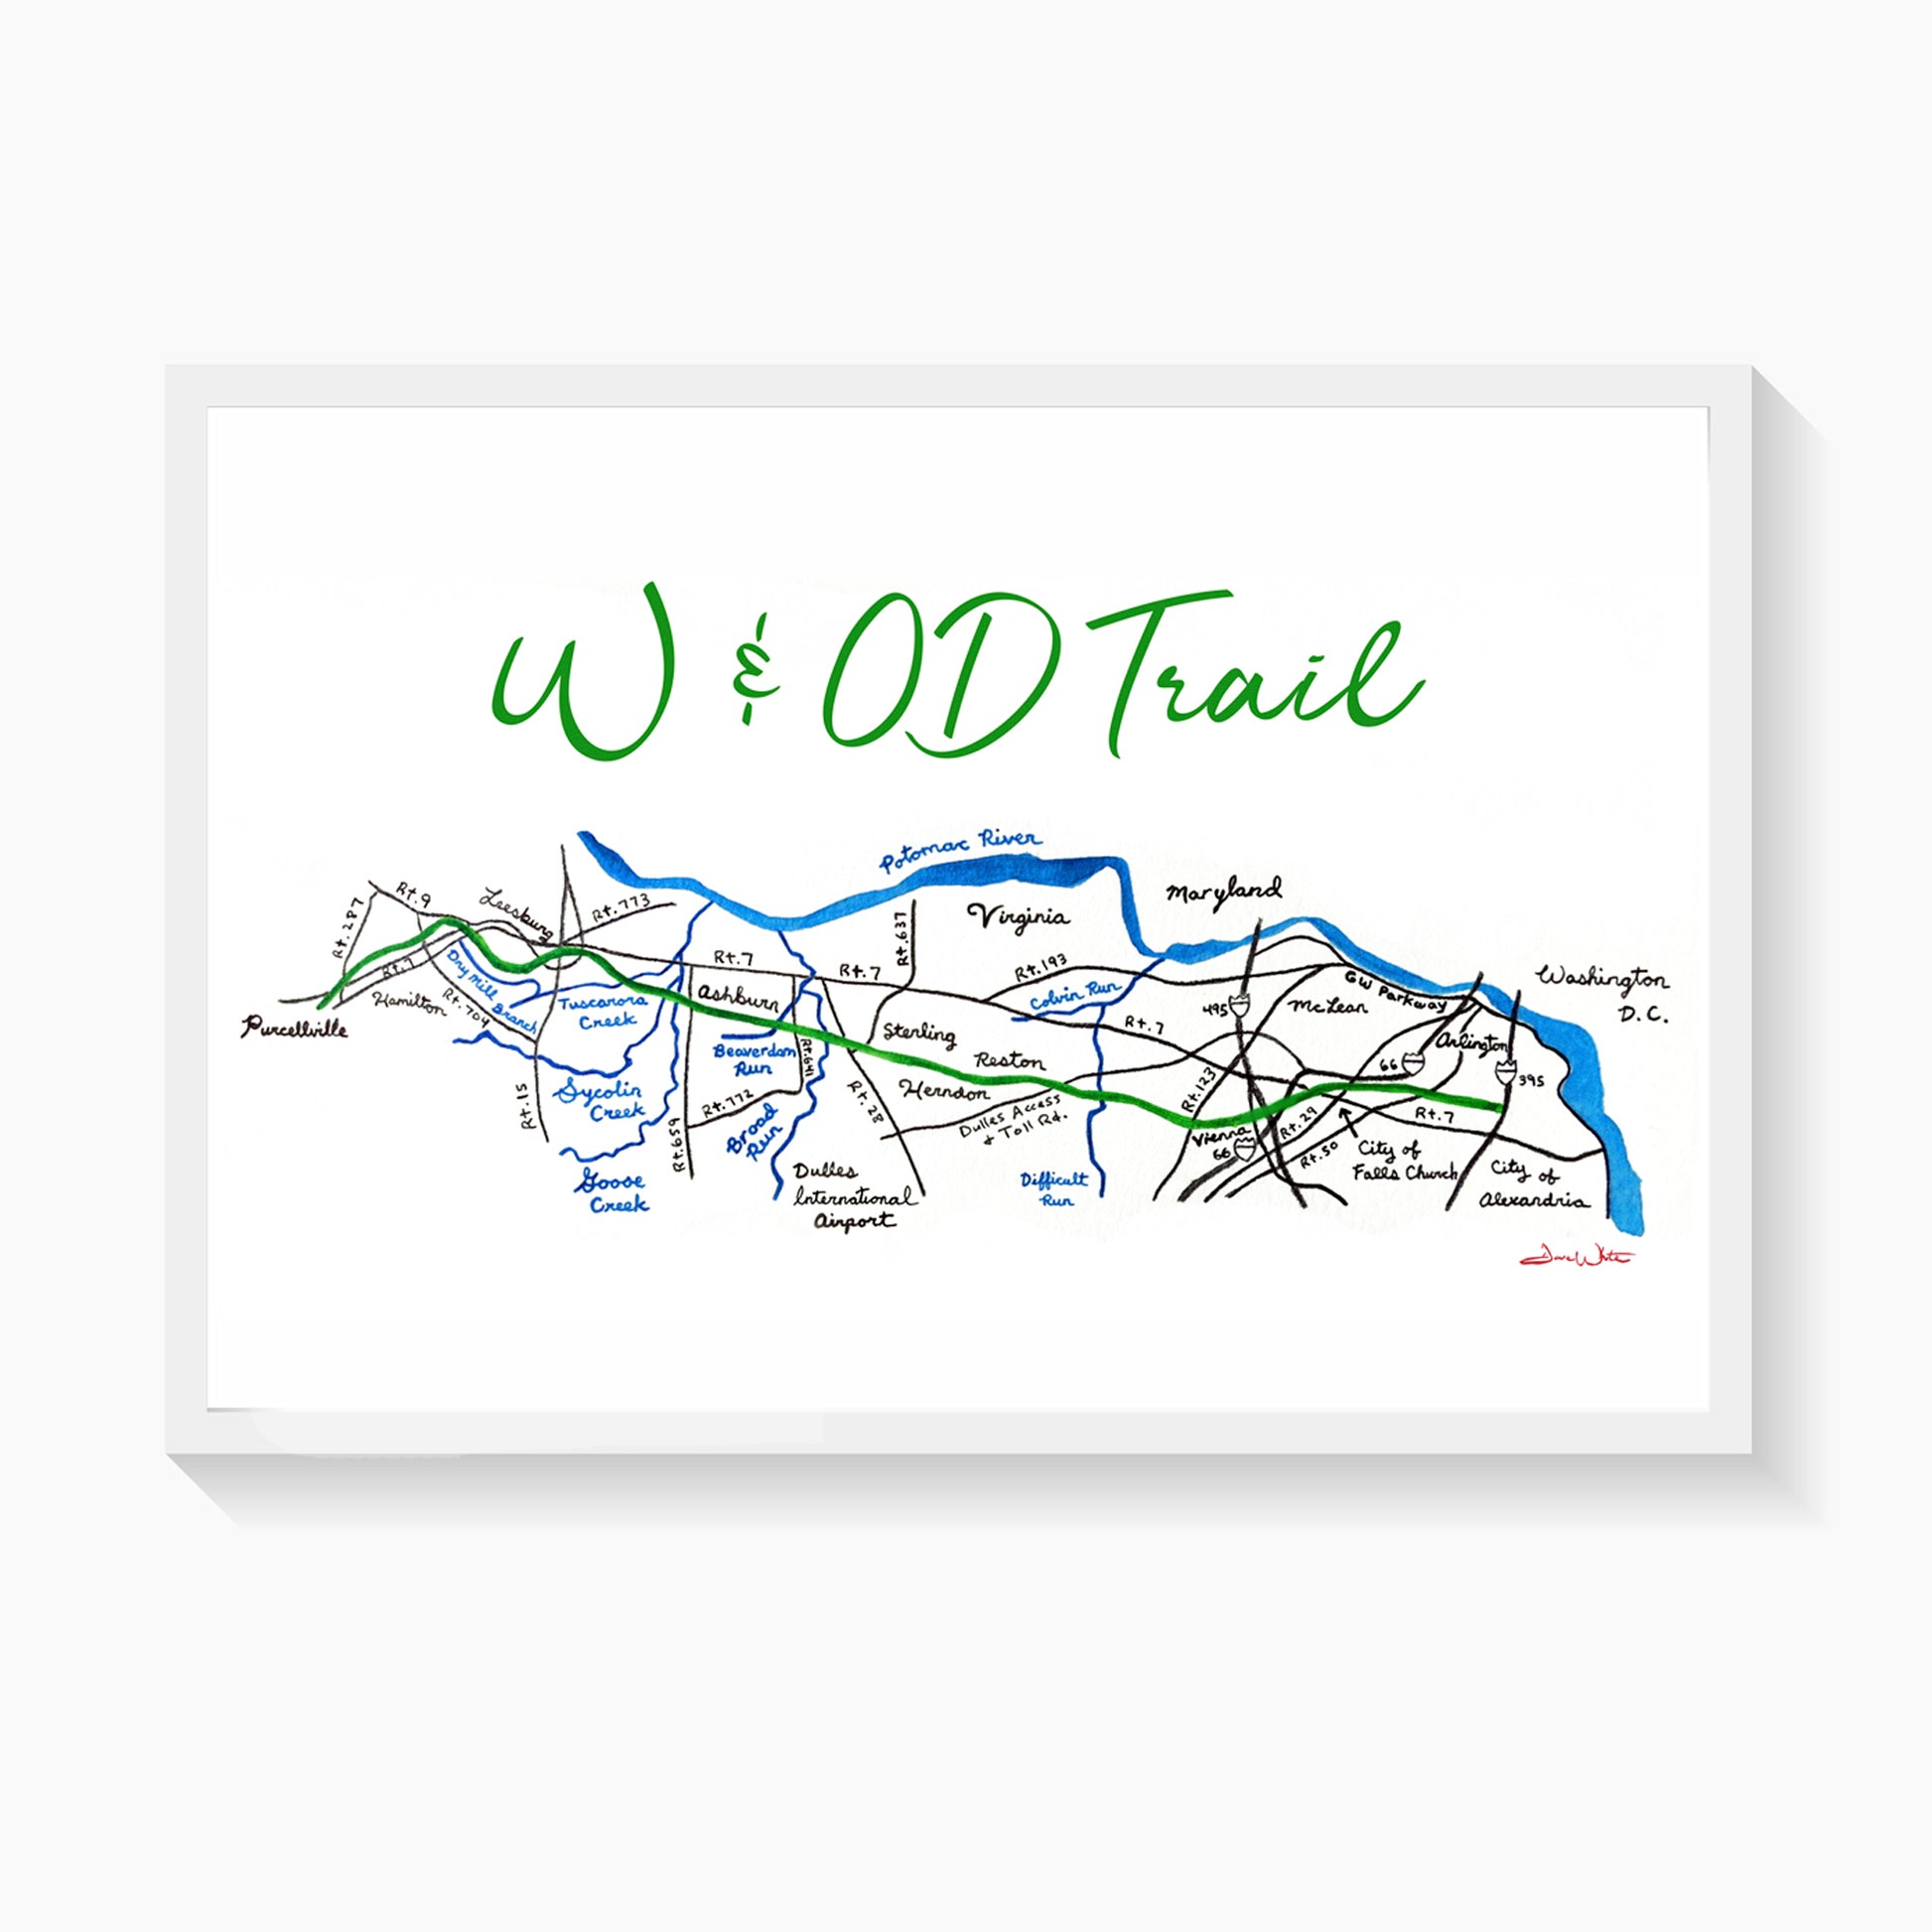 W&OD Trail Map Art Print by Artist Dave White